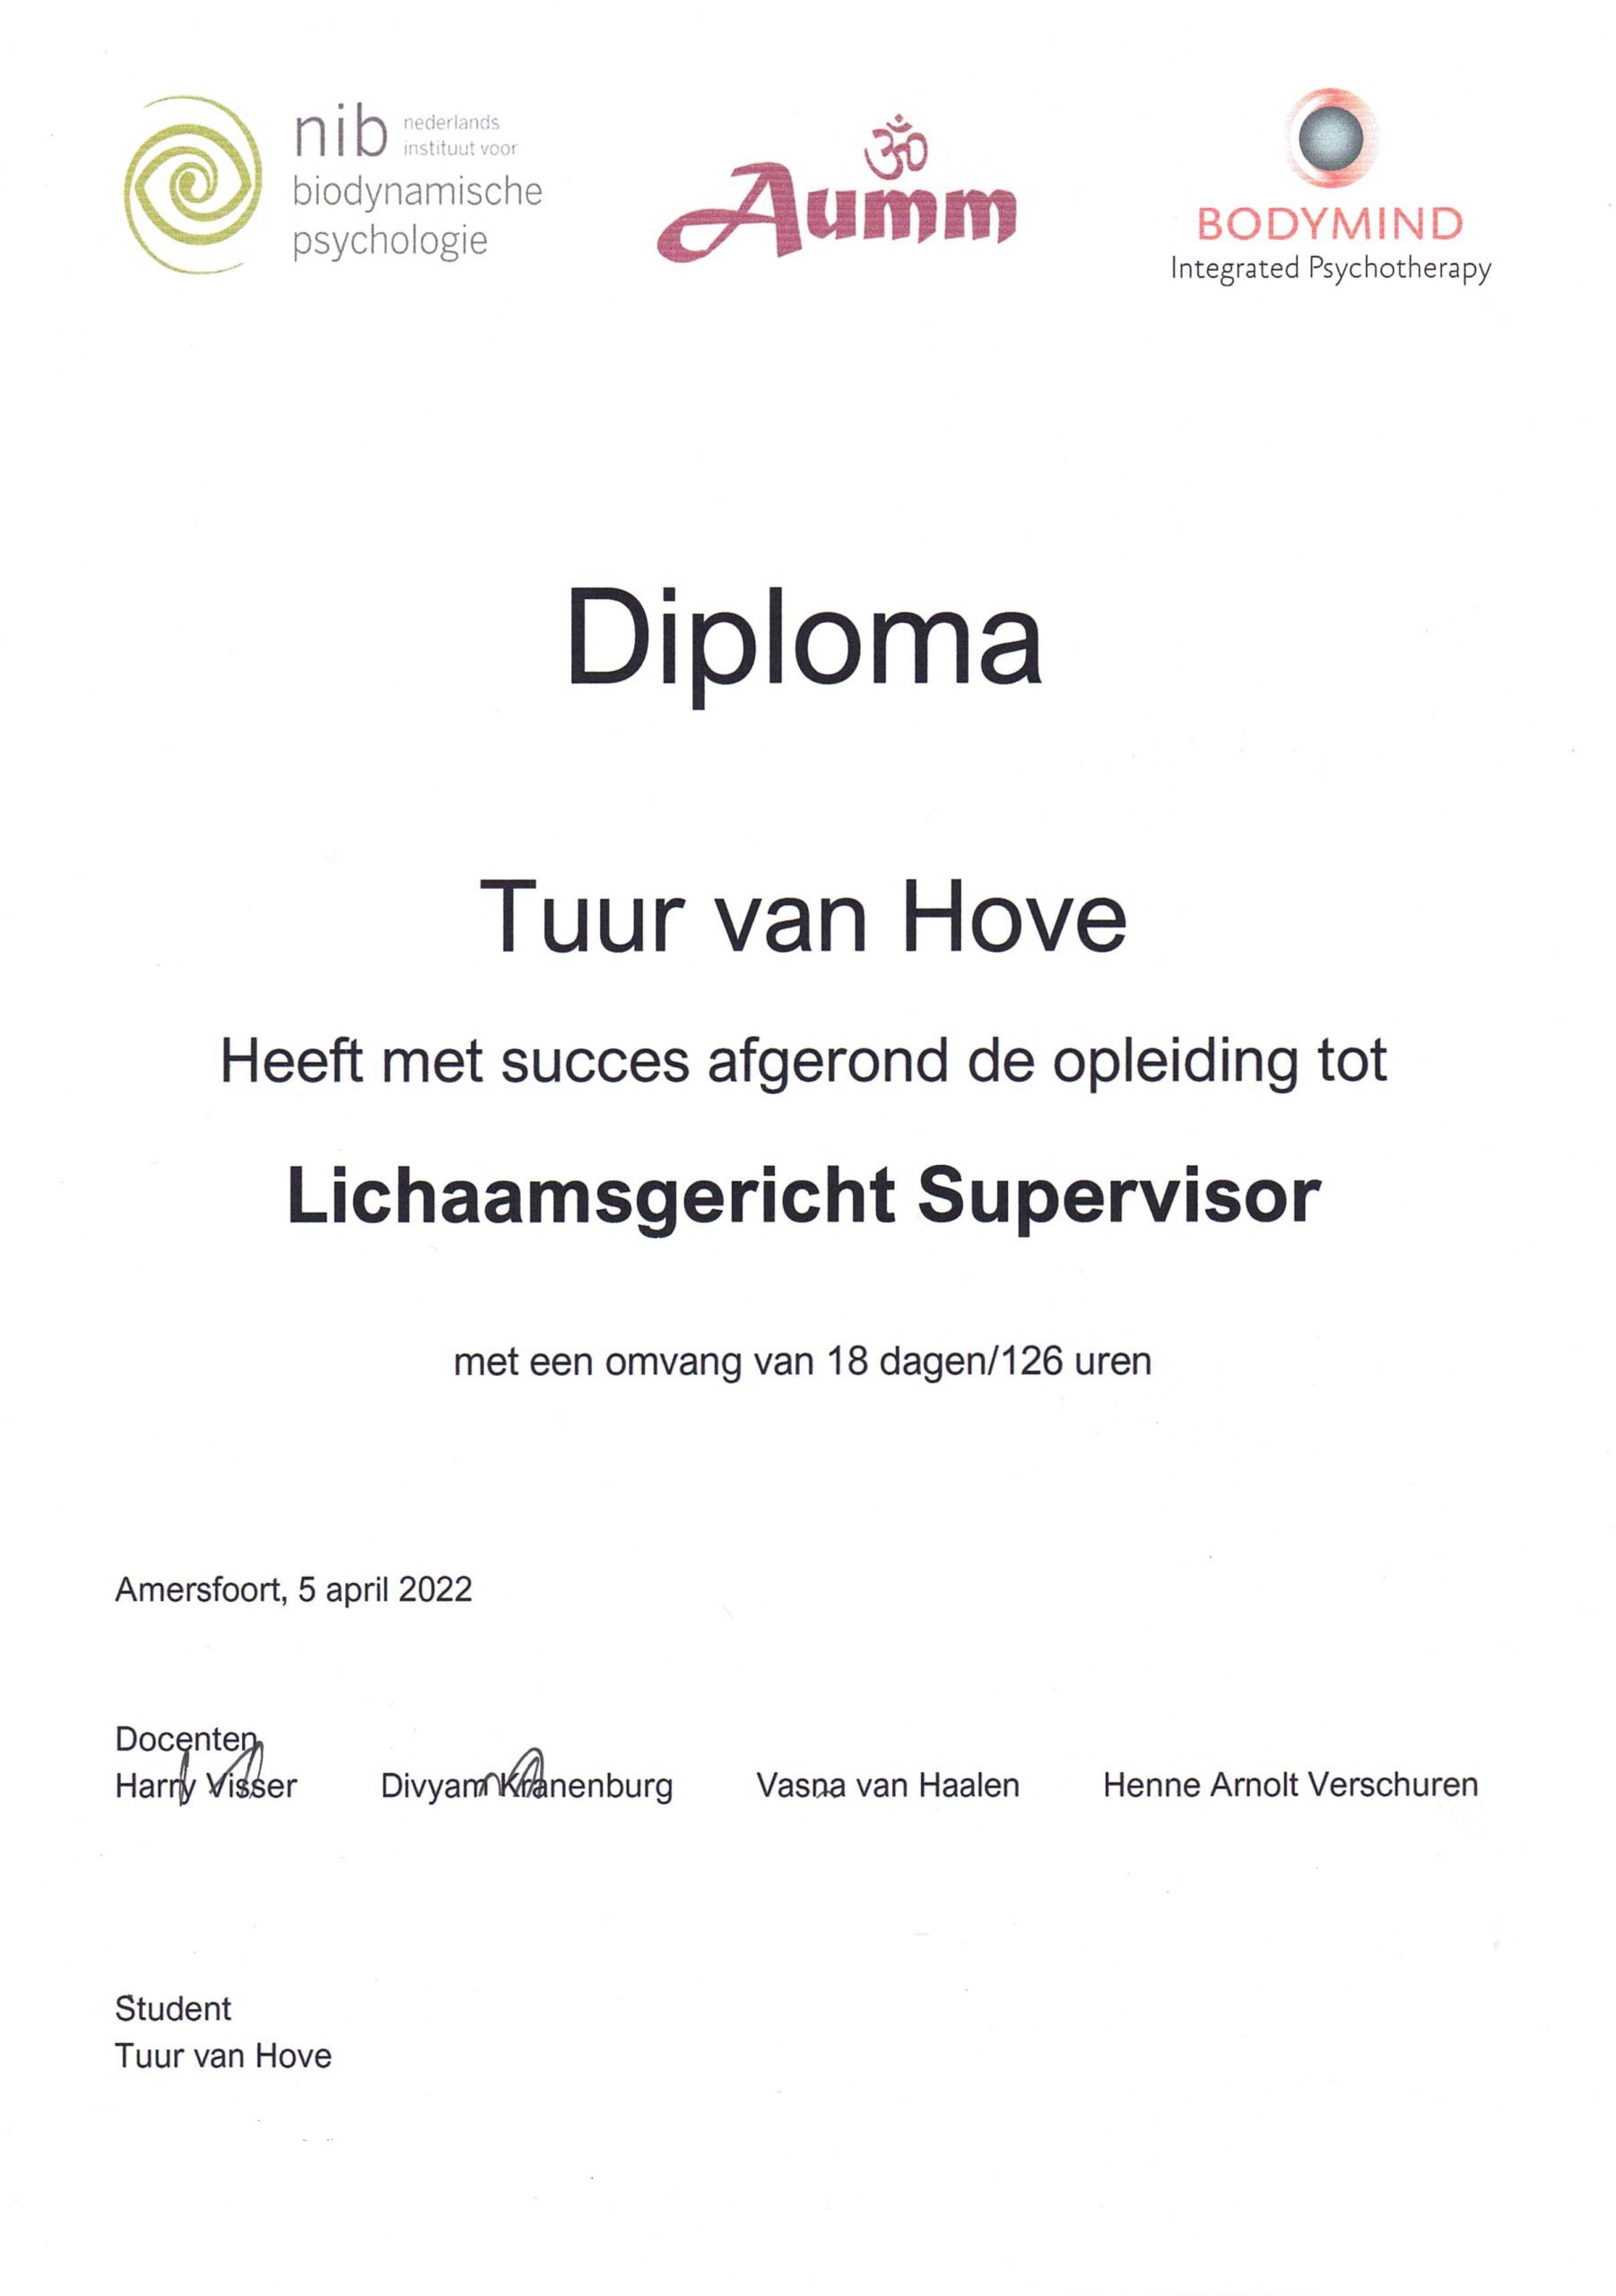 Diploma Supervisor